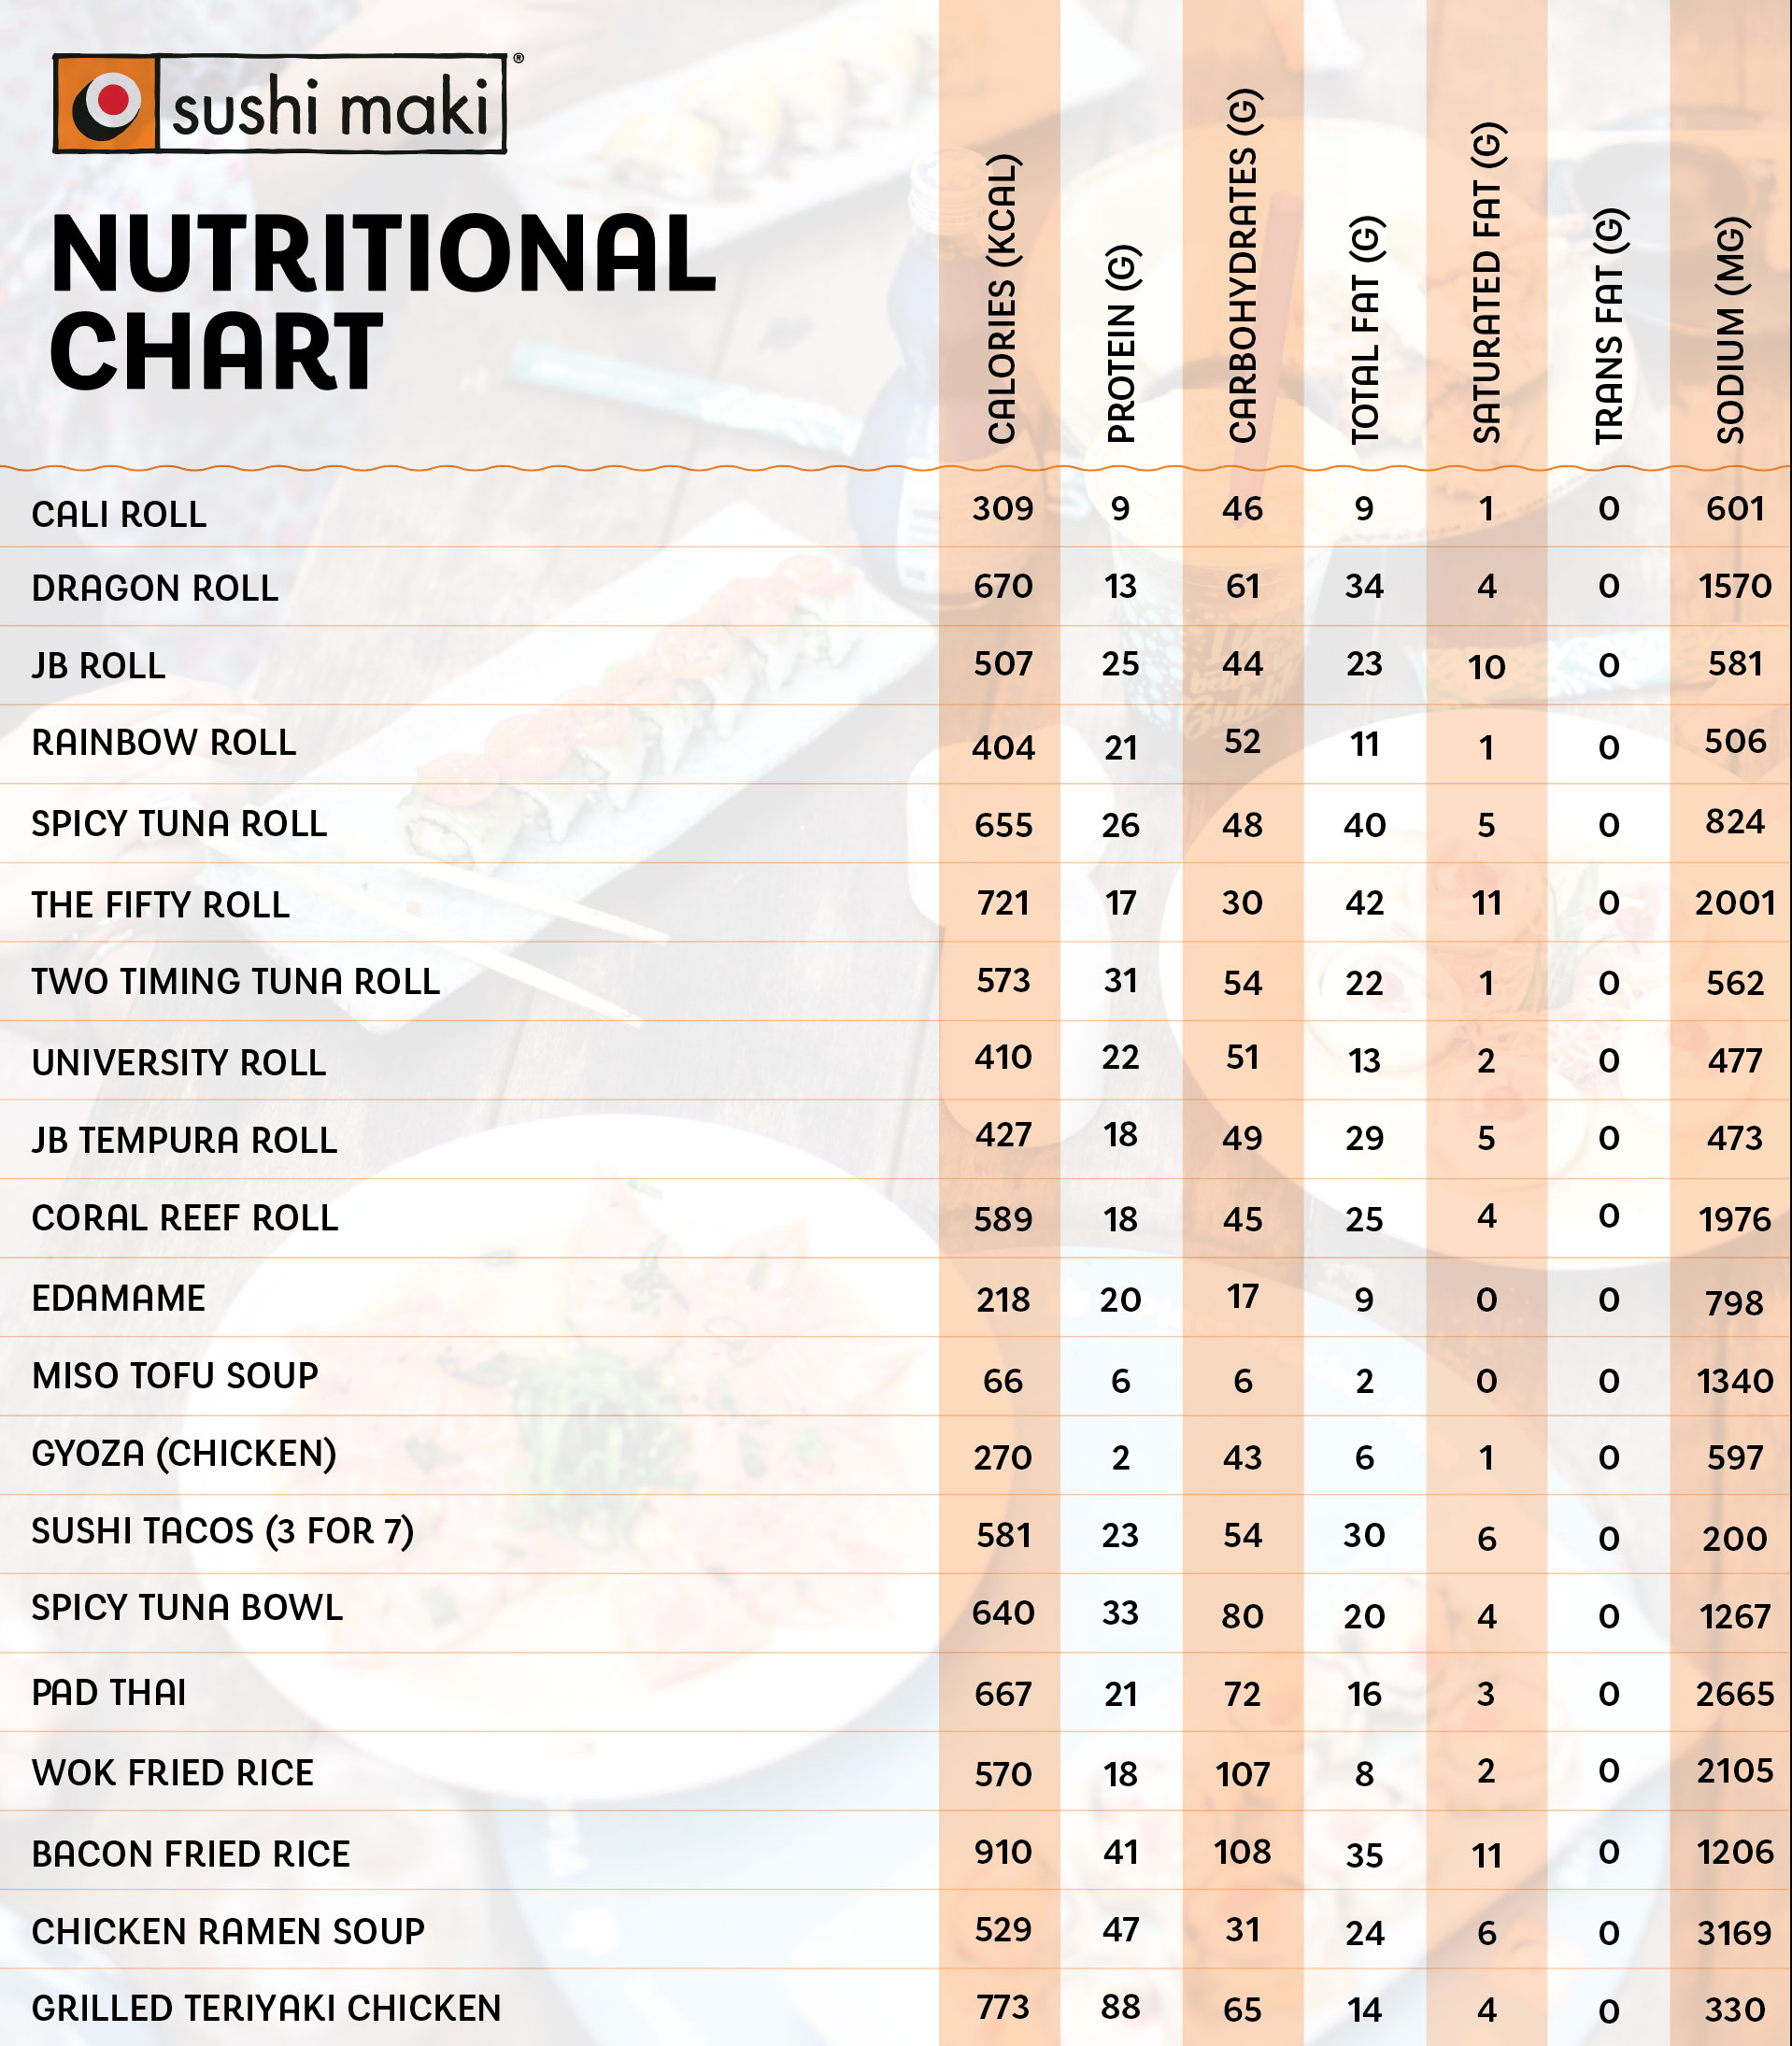 Sushi Maki items Nutritional chart